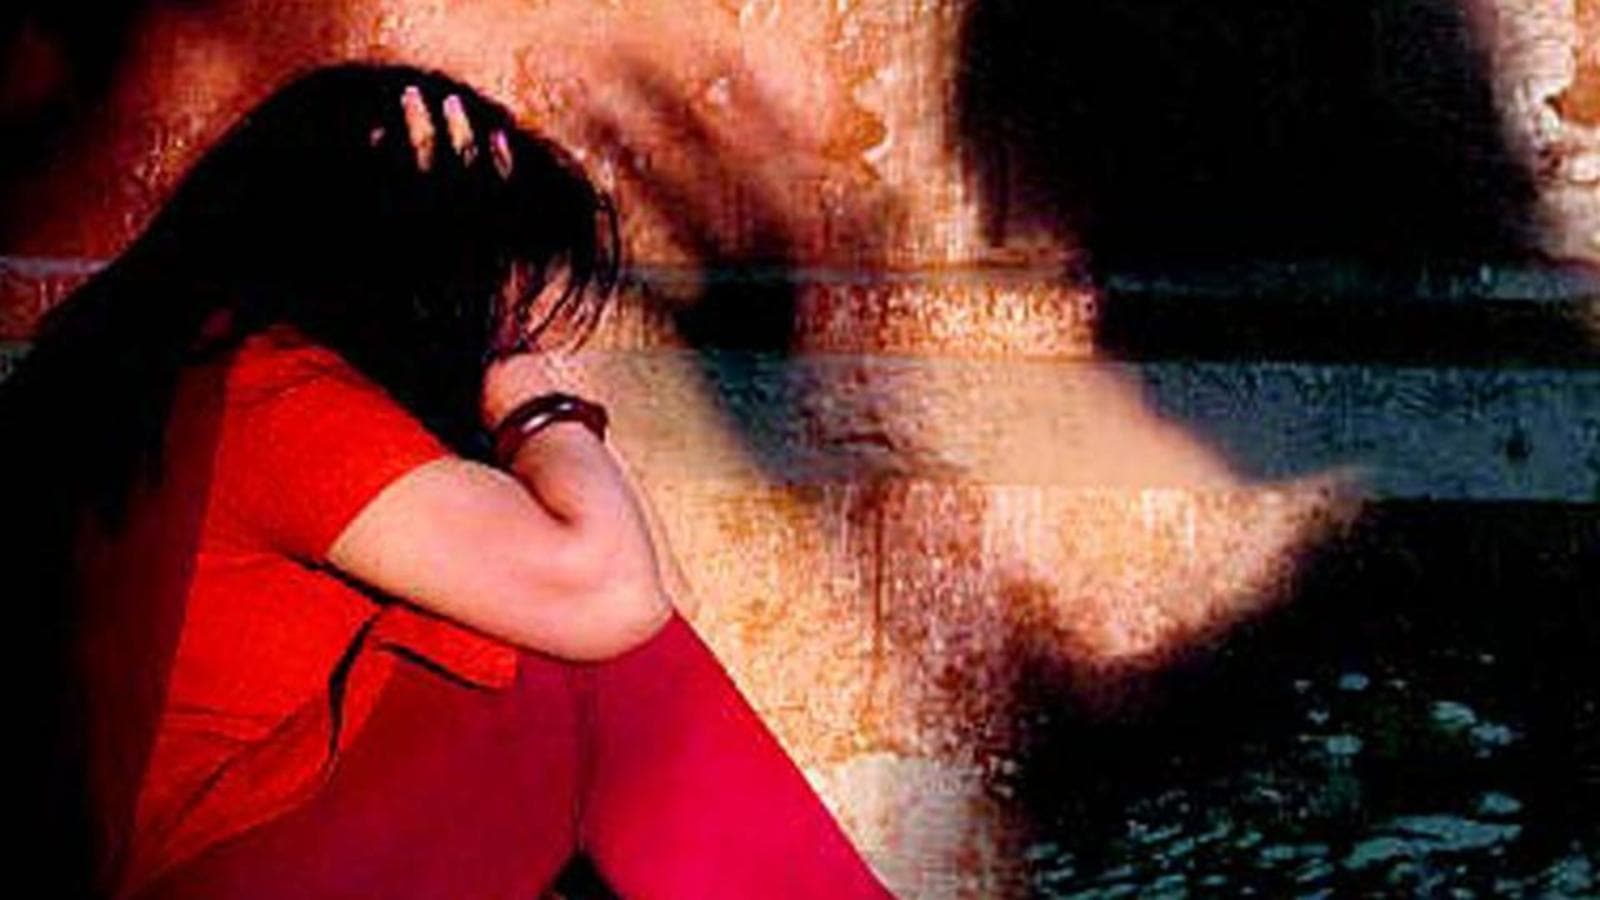 Sex Videos Rape Telugu - Kerala model gang-raped in Kochi, one arrested: Police | Latest News India  - Hindustan Times